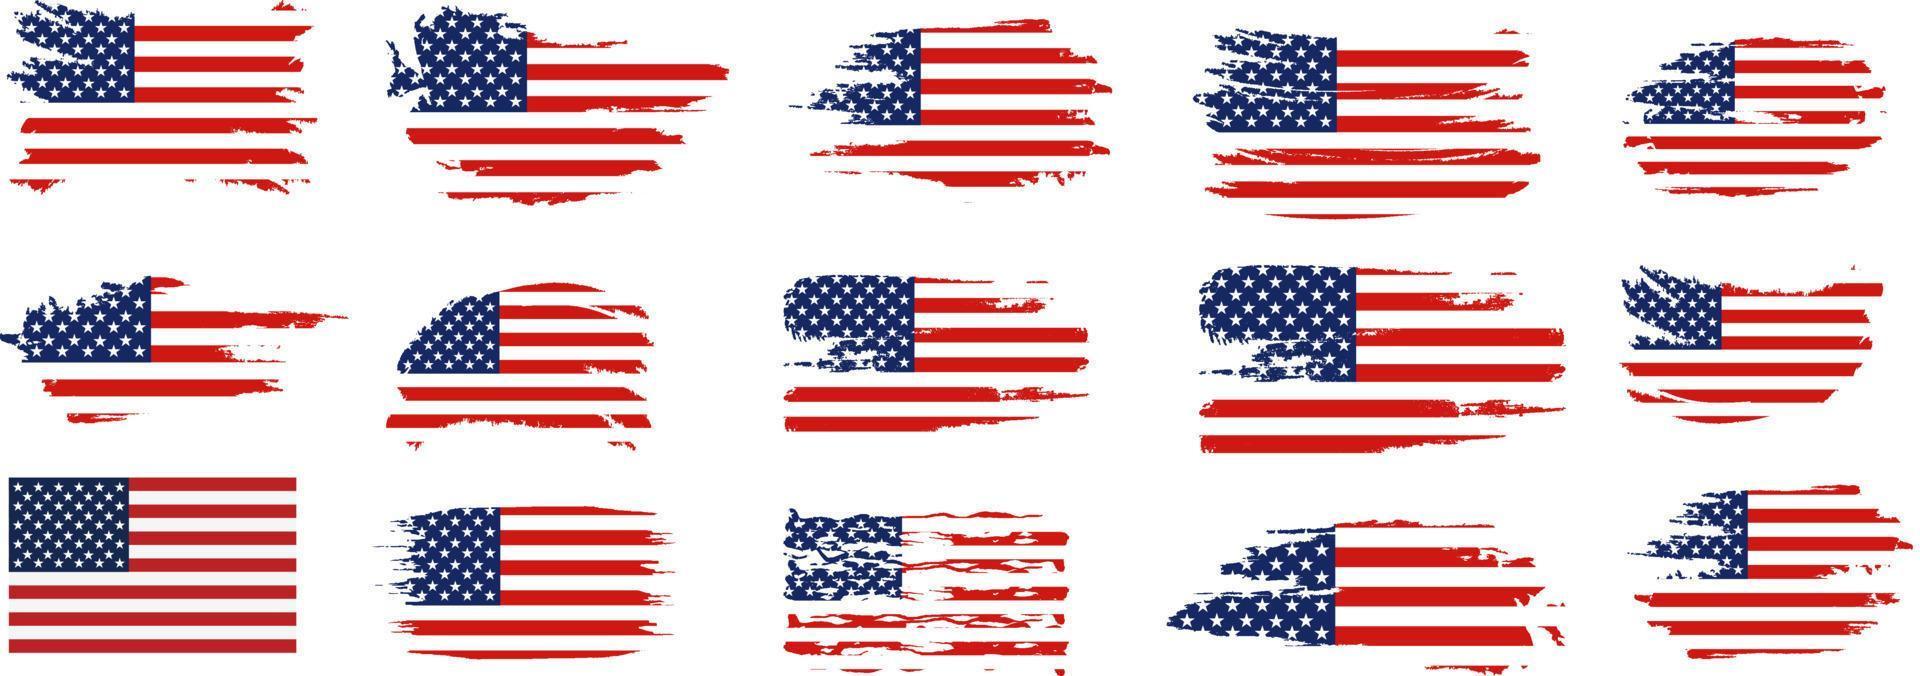 vlag van de verenigde staten van amerika, borstel achtergrond set. usa vlag borstel vector set. gelukkige 4 juli usa onafhankelijkheidsdag wenskaart. belettering en Amerikaanse vlag grunge brush verf achtergrond.